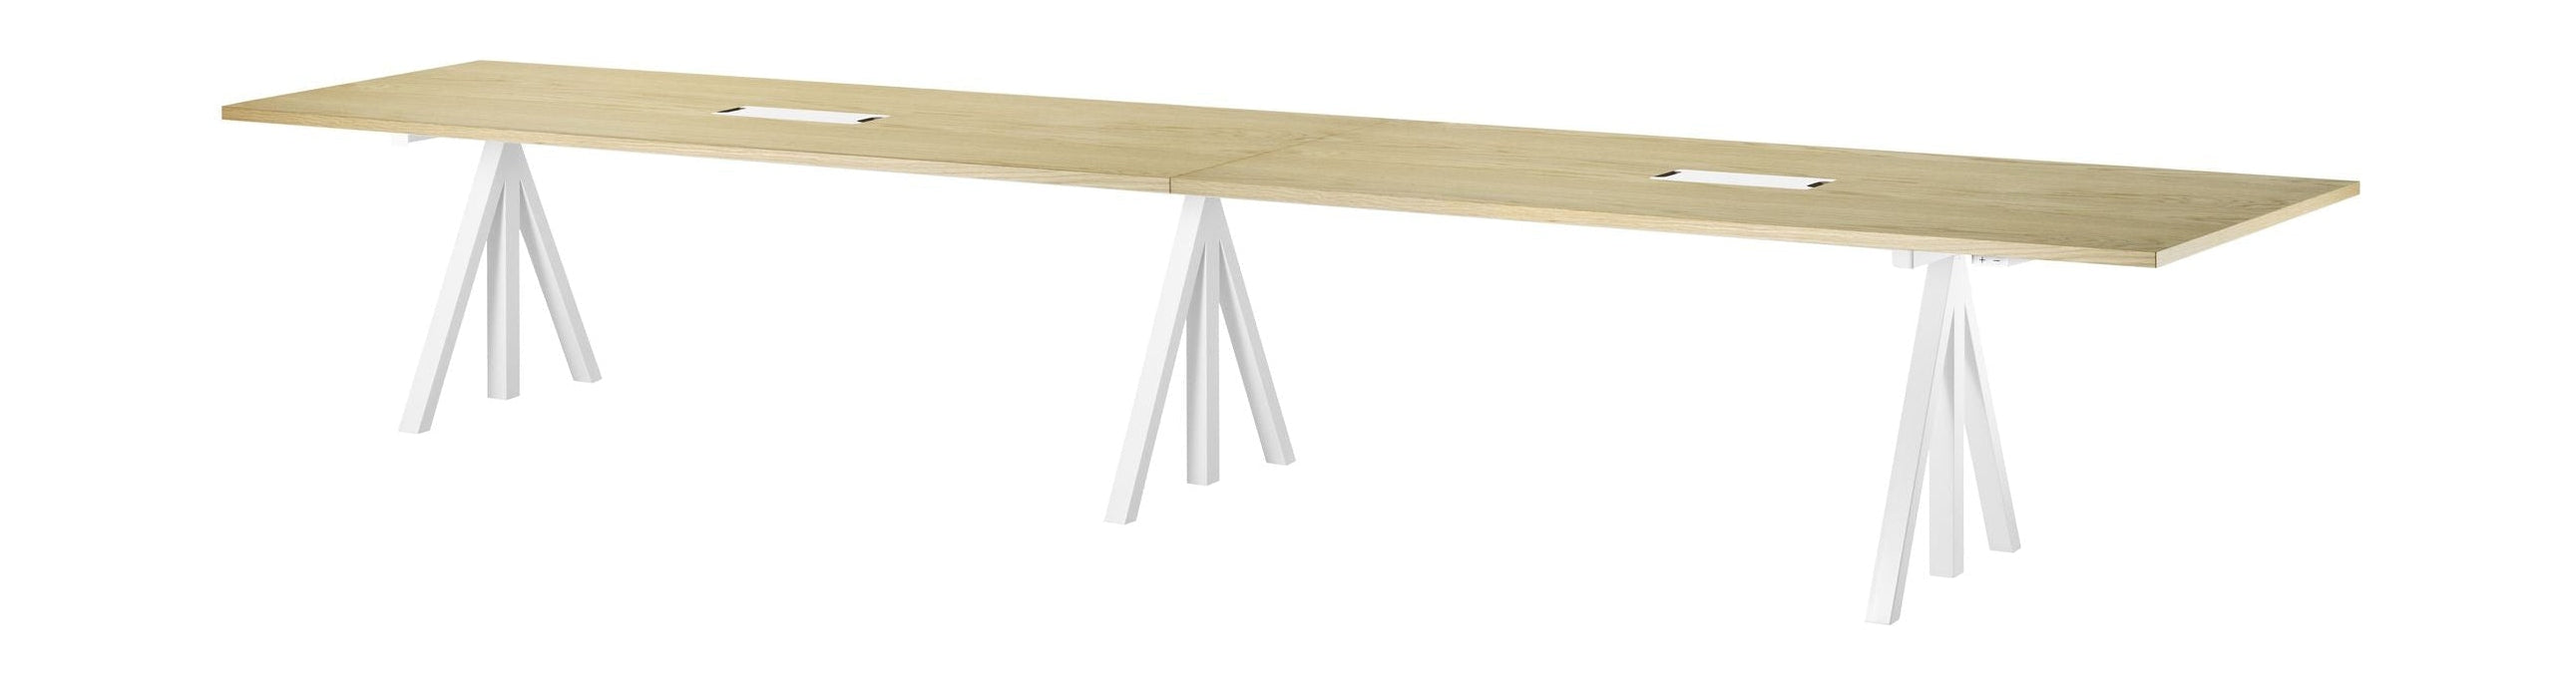 String Furniture Fungerar höjd justerbar mötesbord ek, 90x180 cm